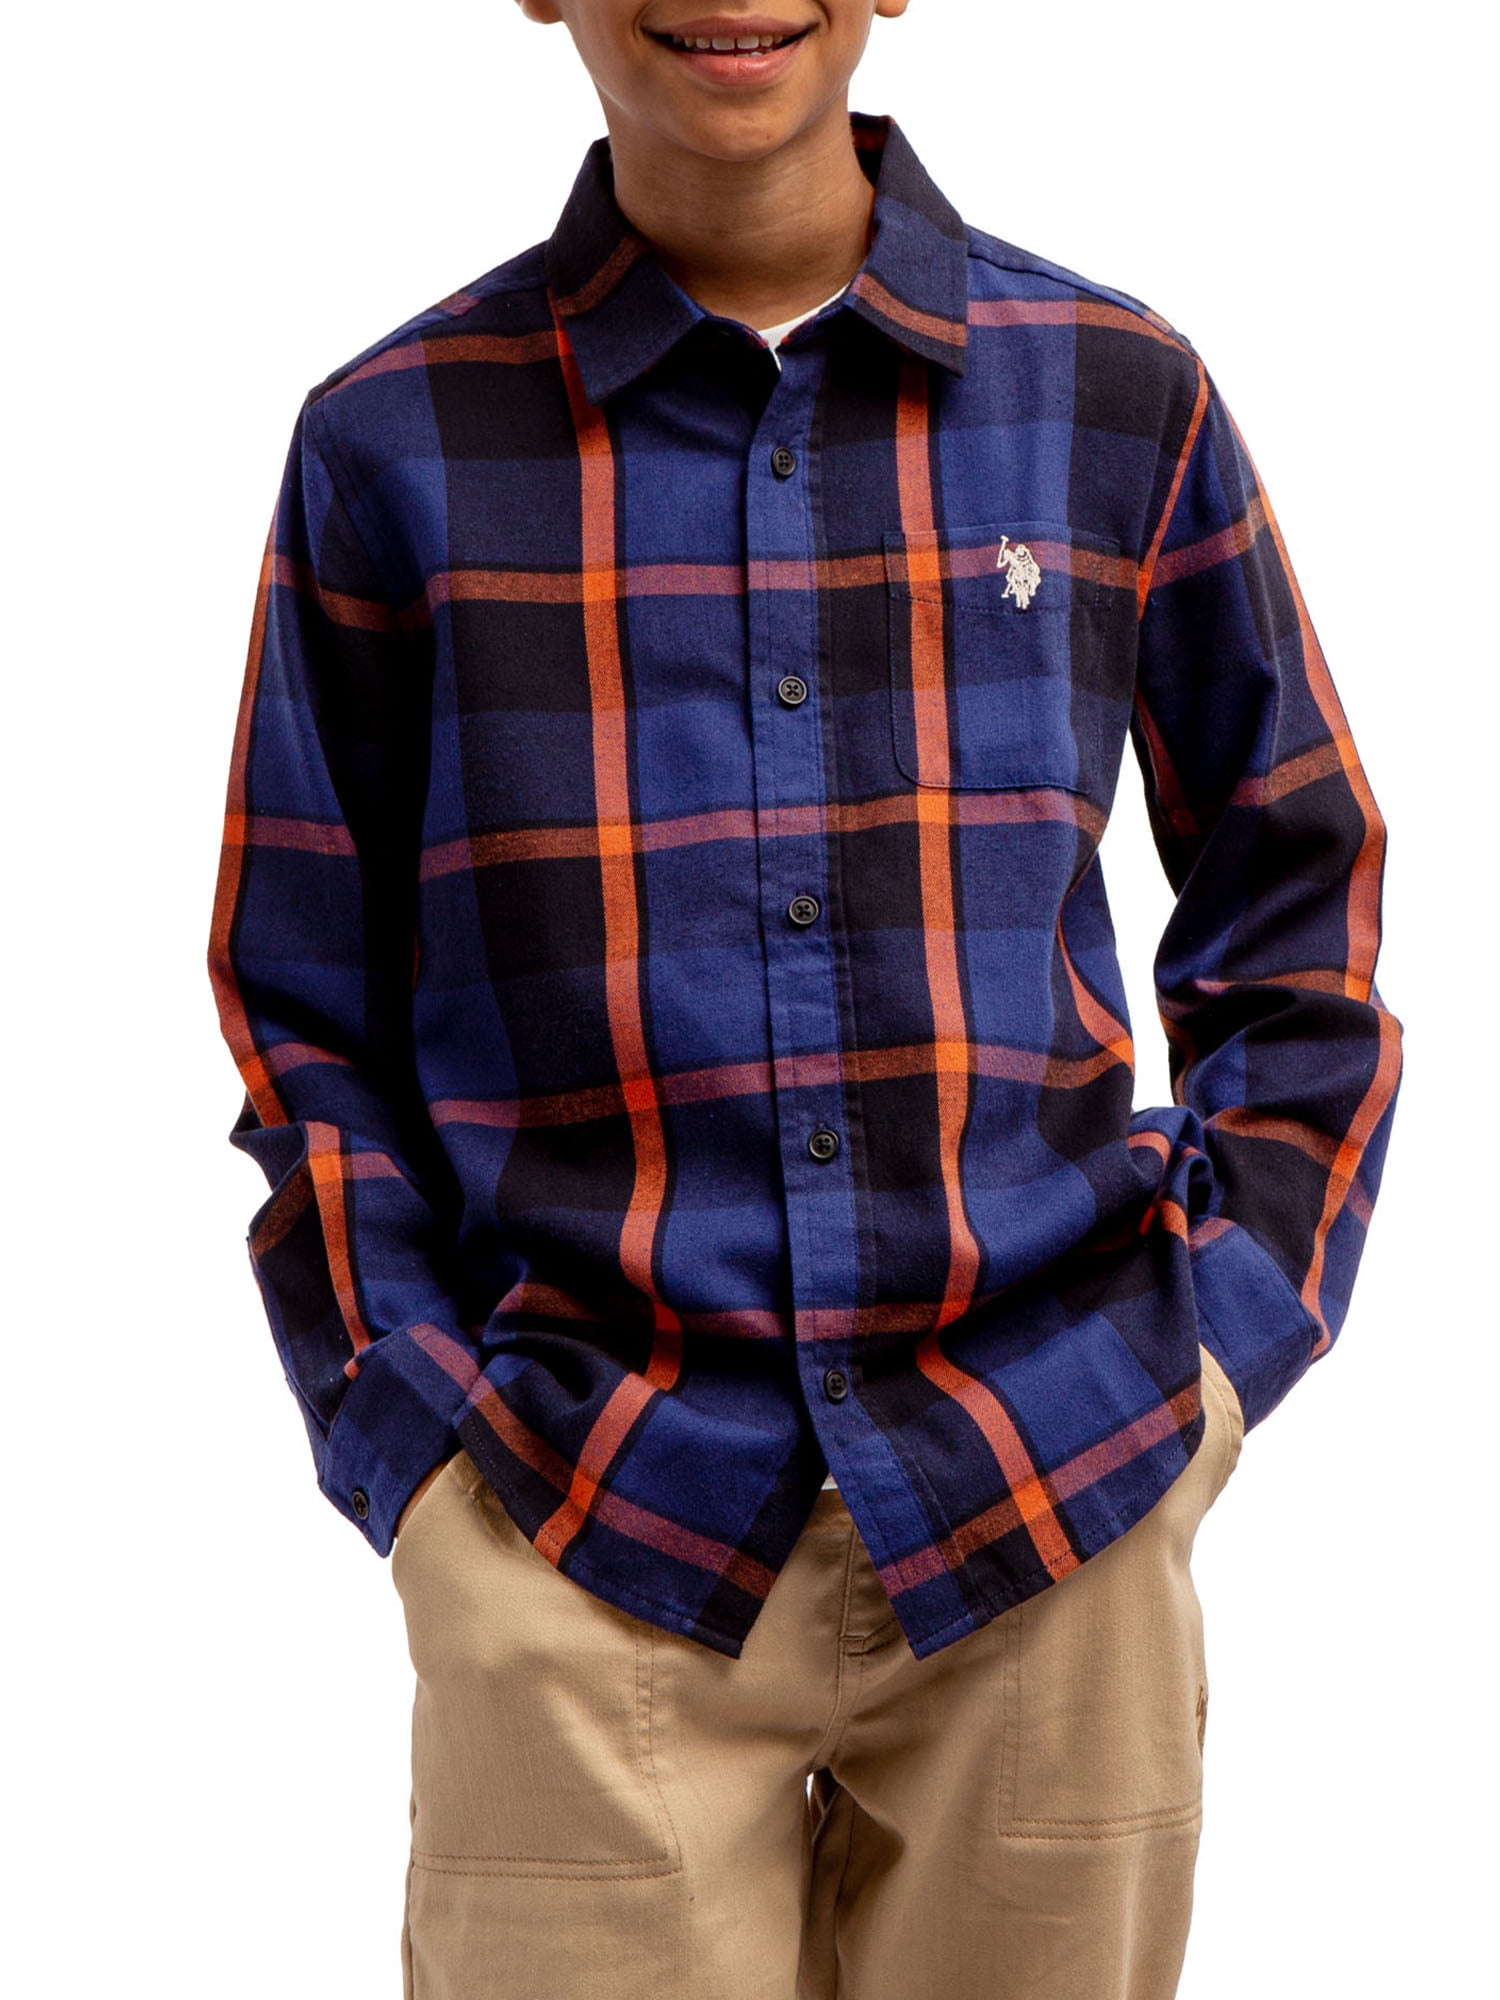 U.S. Polo Assn. Boys Flannel Button Up Shirt, Sizes 4-18